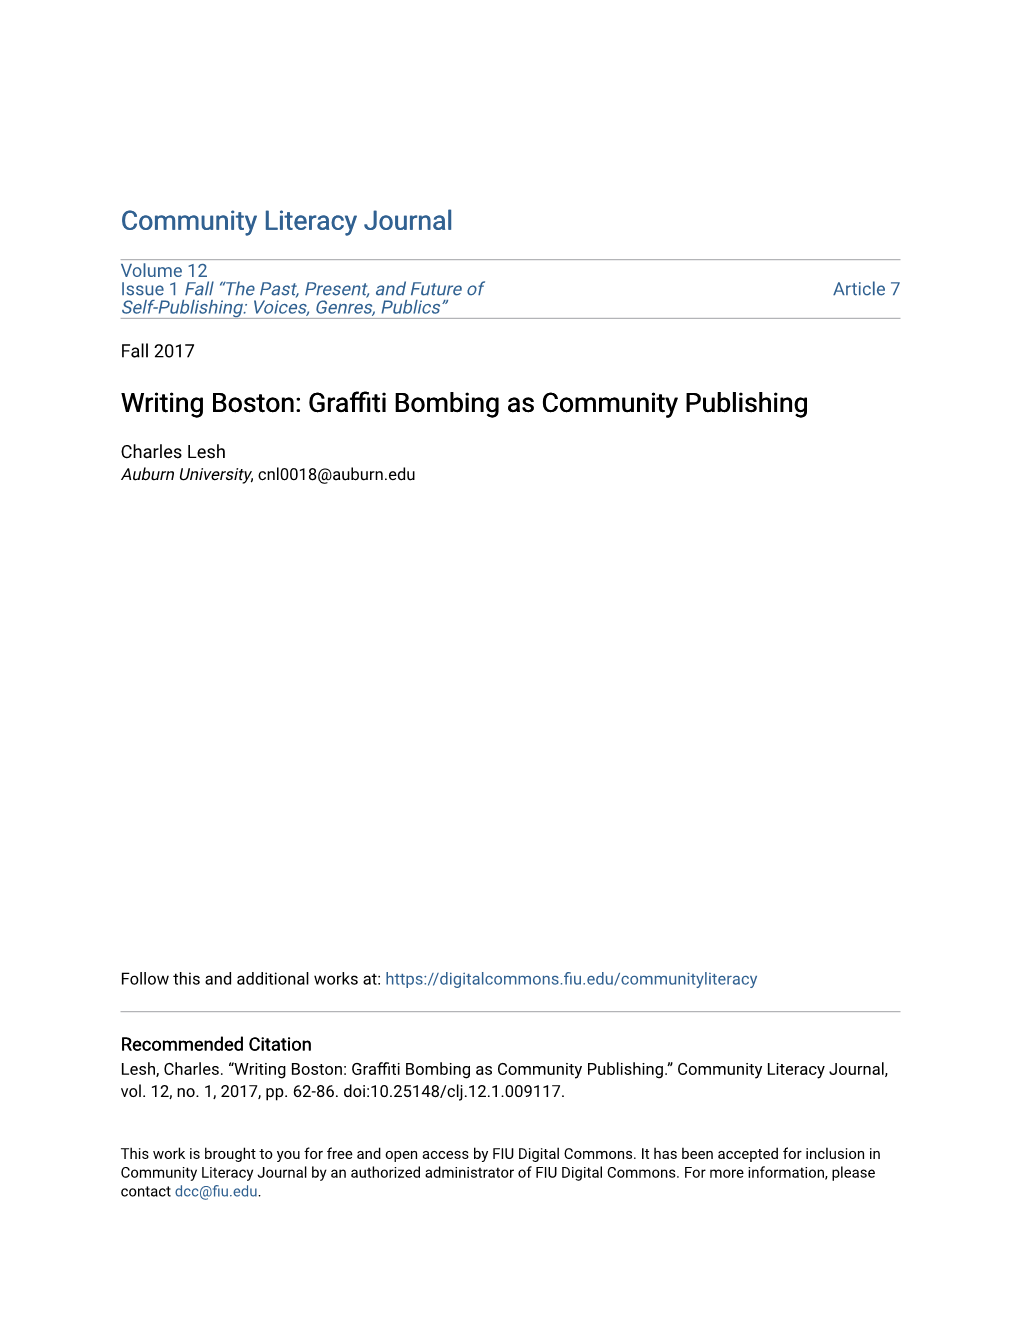 Writing Boston: Graffiti Bombing As Community Publishing